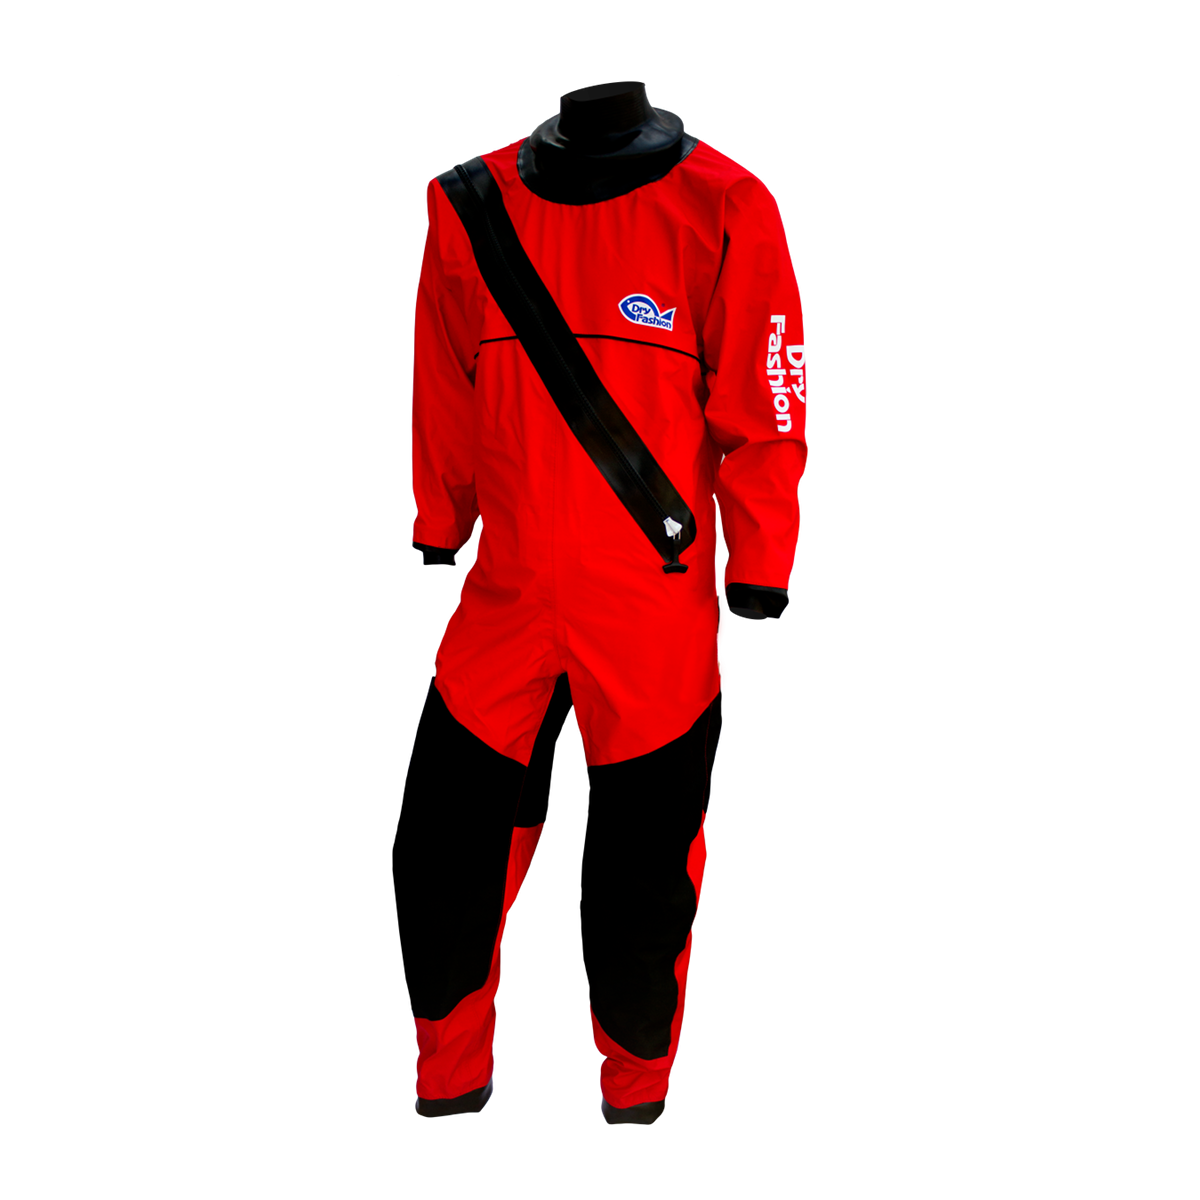 Dry Fashion Profi-Sailing Regatta drysuit ademend unisex rood, maat M